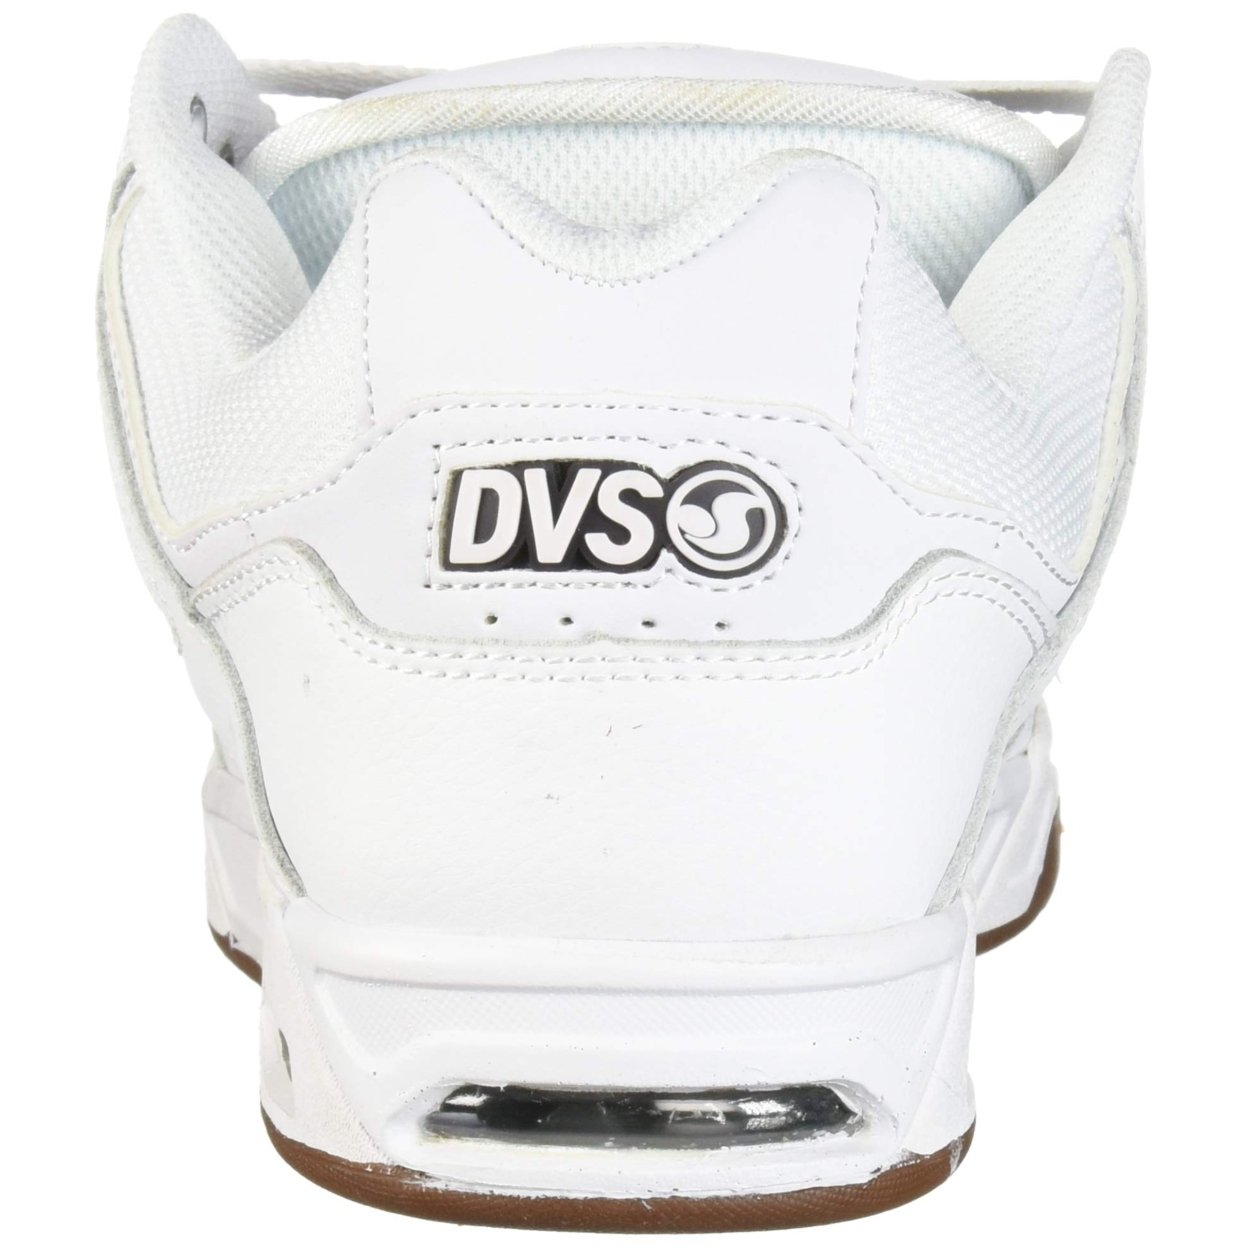 Dvs Footwear Mens Men's Enduro HEIR Skate Shoe WHITE GUM NUBUCK - WHITE GUM NUBUCK, 11-M